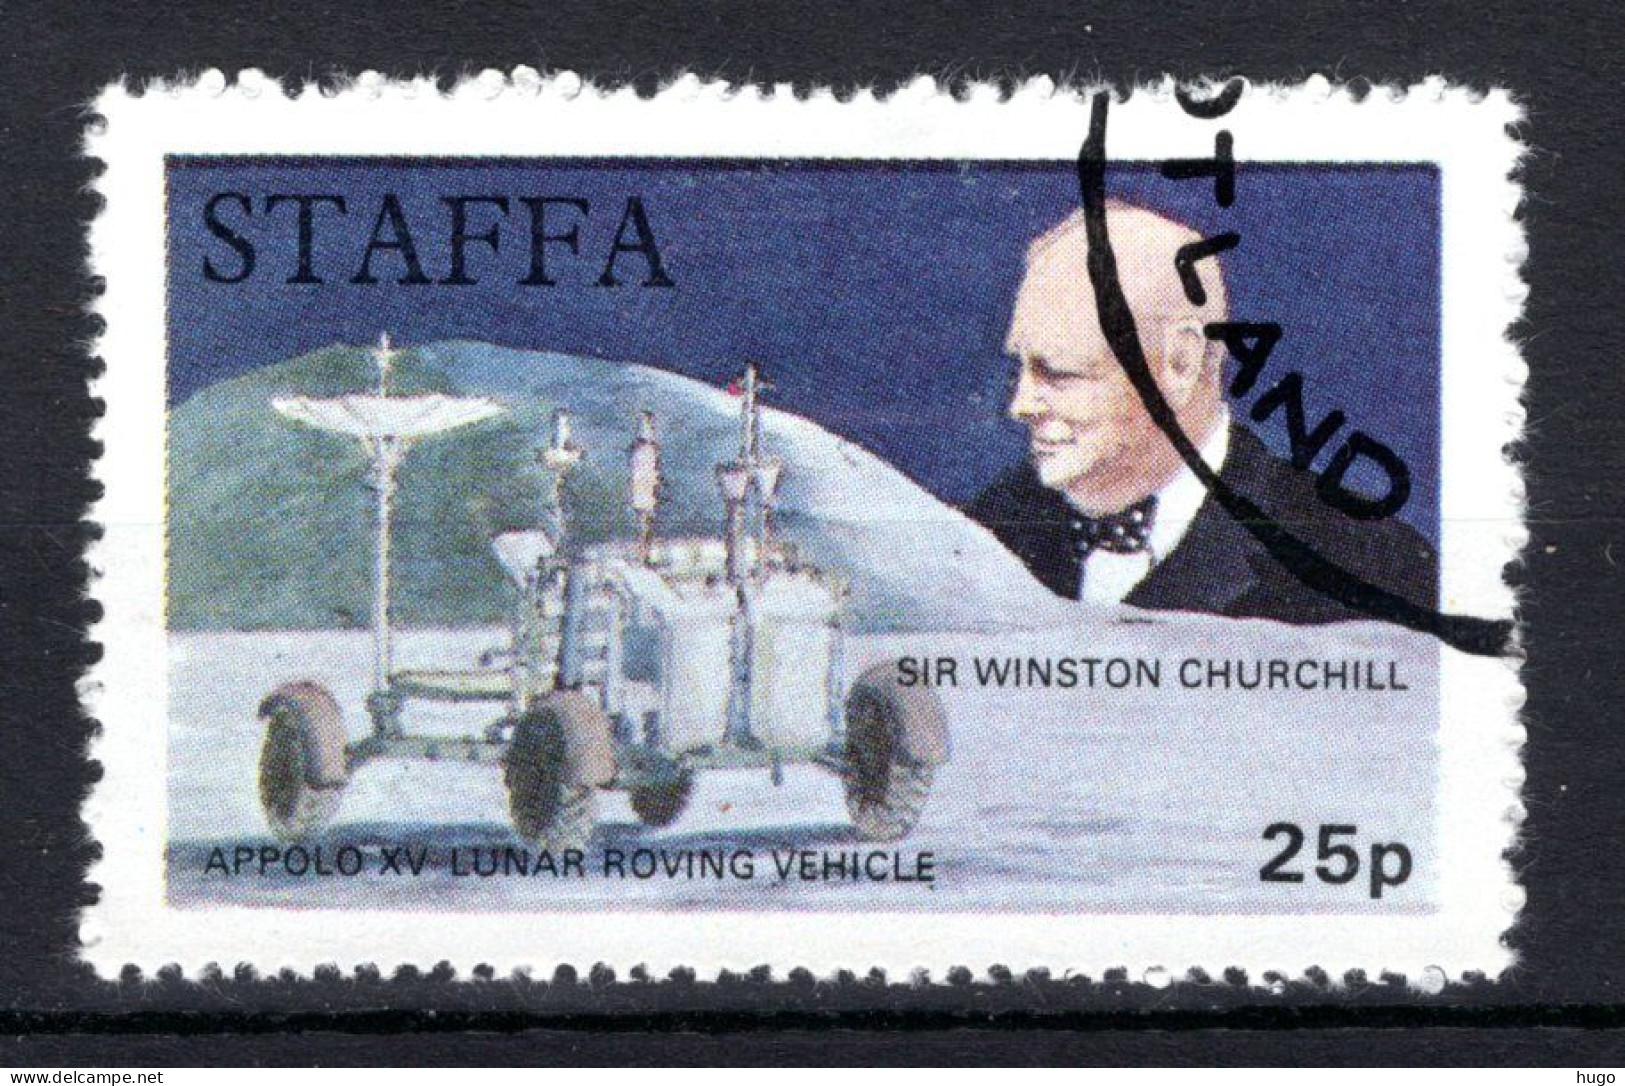 STAFFA -  Appolo XV Lunar Module, Sir Winston Churchill 1972 - Emissions Locales